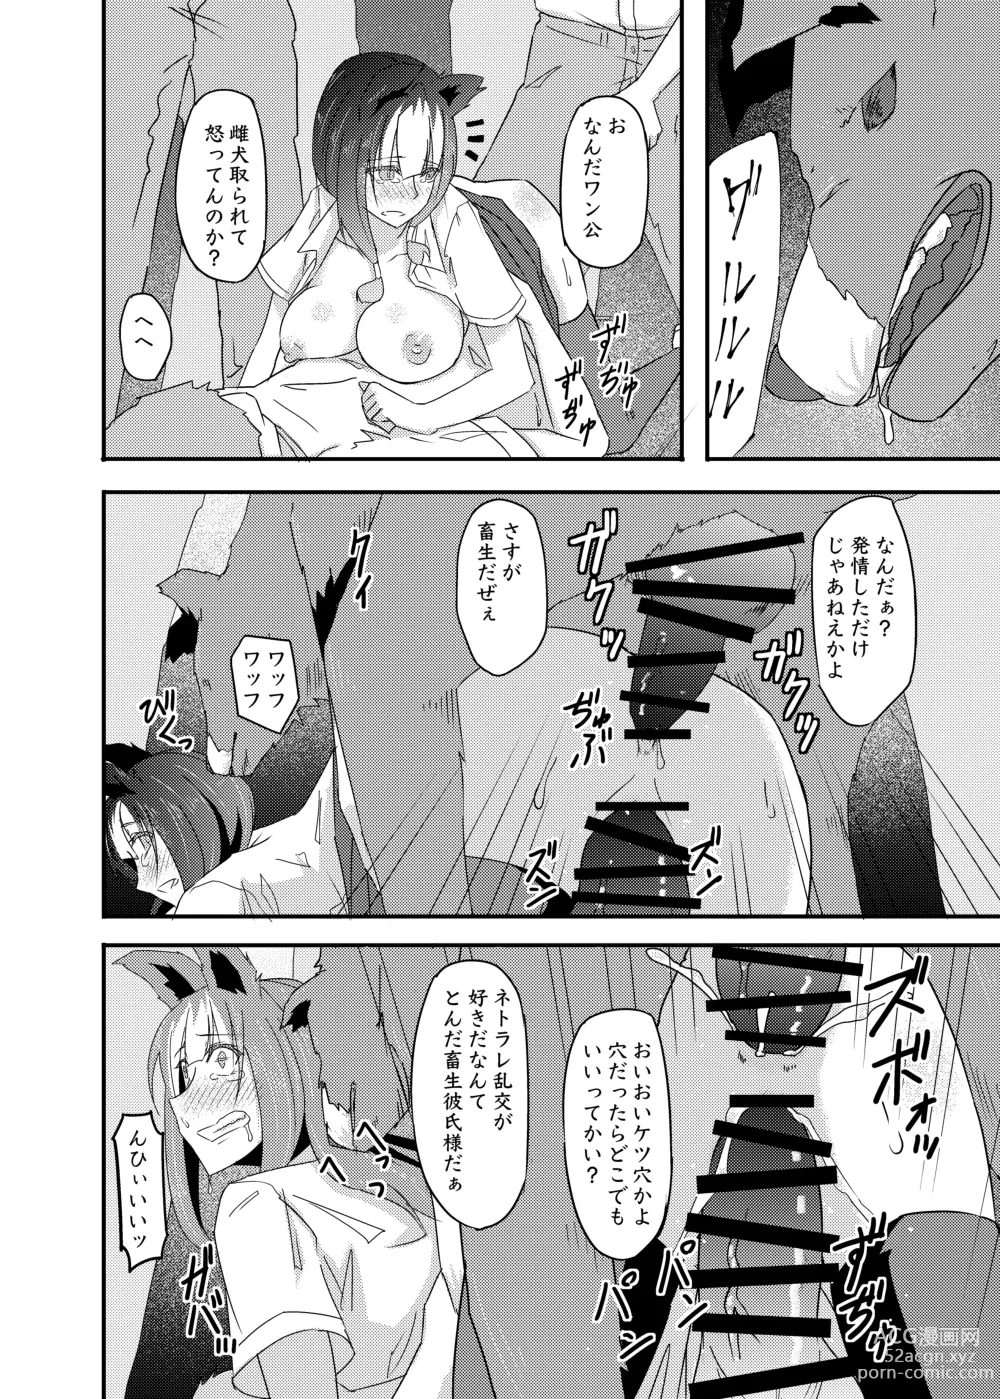 Page 22 of doujinshi Isekai kara no Juujin